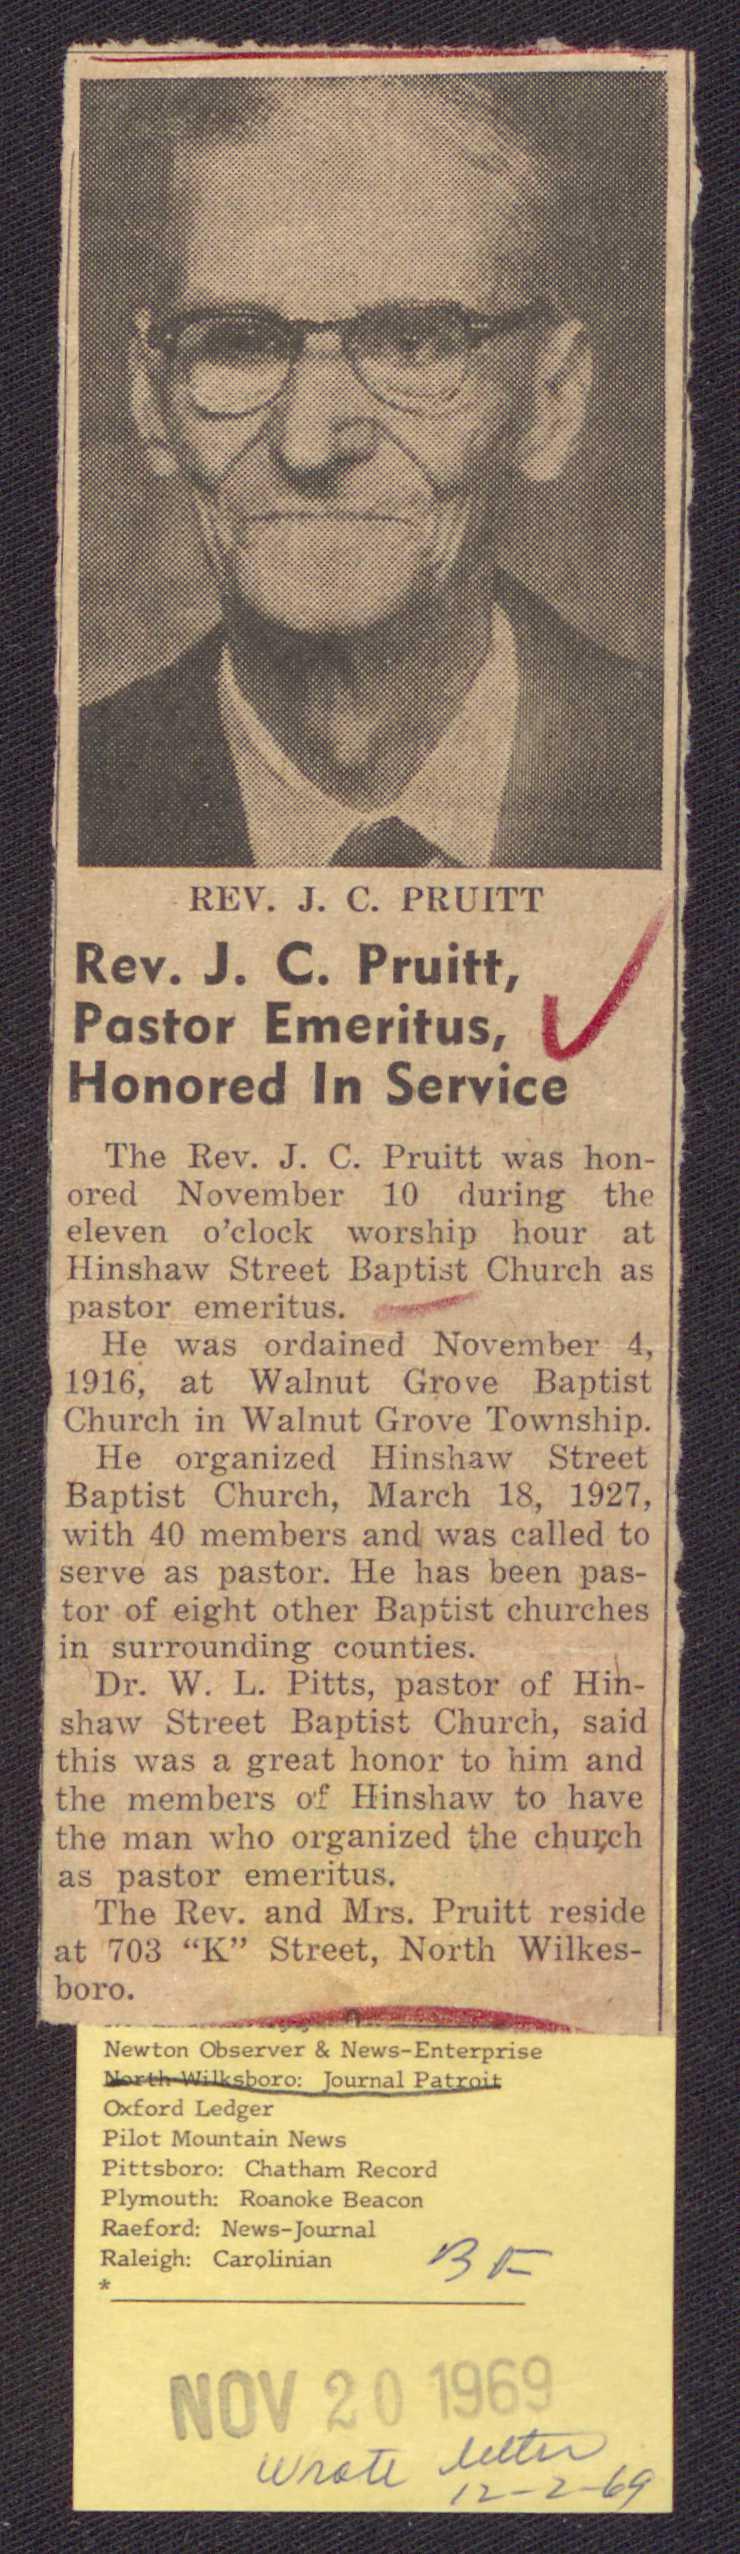 Rev. J. C. Pruitt, Pastor Emeritus, Honored In Service The Rev. J. C. Pruitt was honored November 10 during the eleven o'clock worship hour Hinshaw Street Baptist Church pastor emeritus.